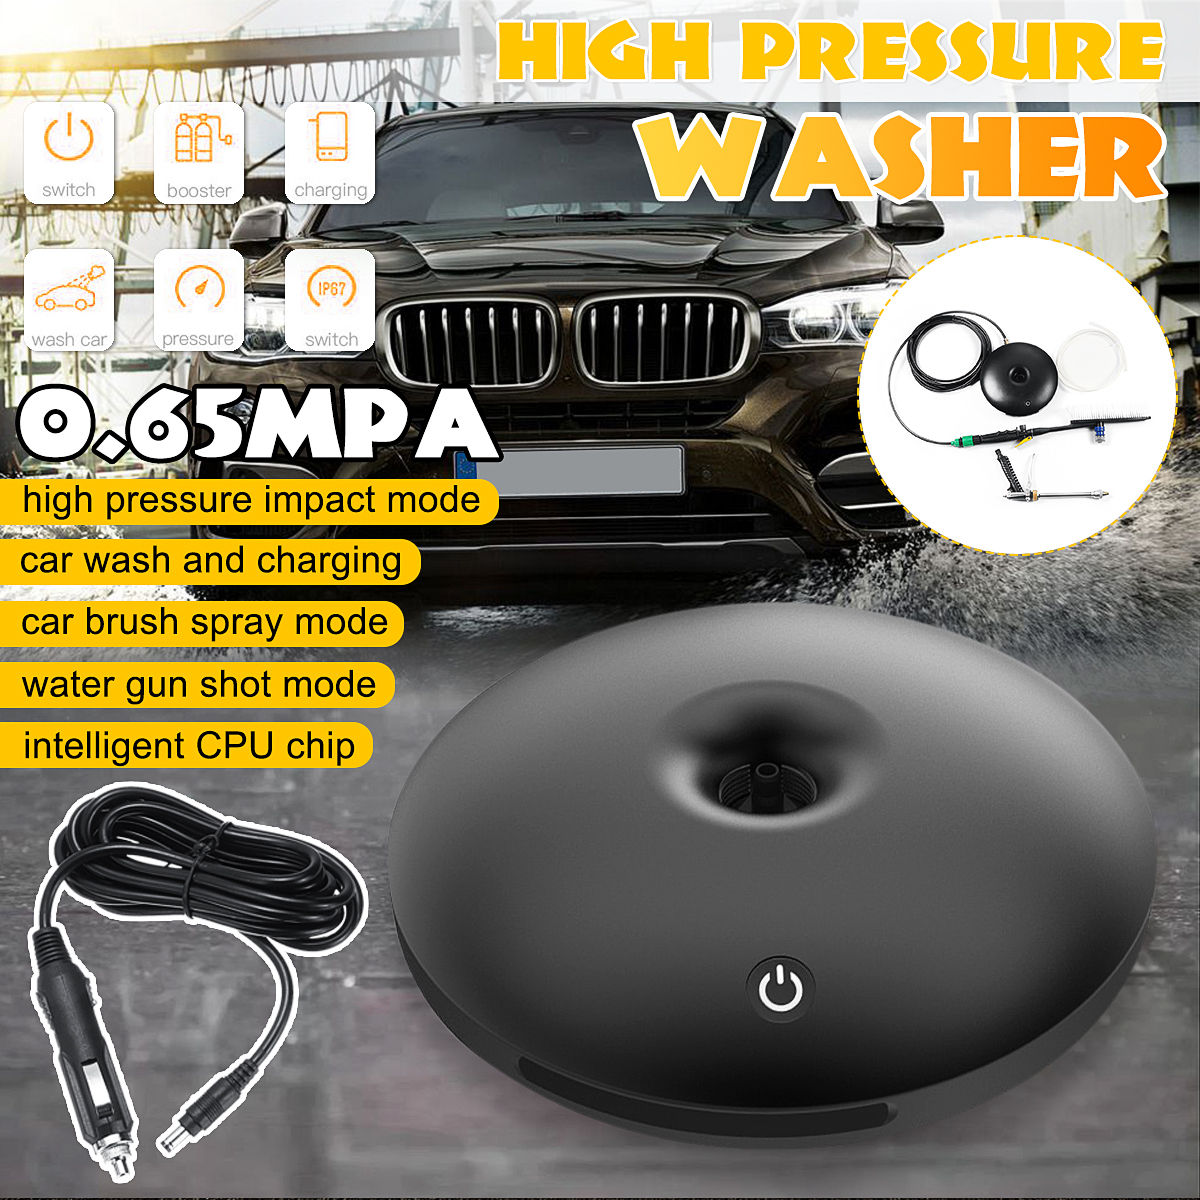 High-Pressure-Washer-Ci-garette-Energize-Protable-Water-G-un-Mini-Washing-Machine-1453064-1